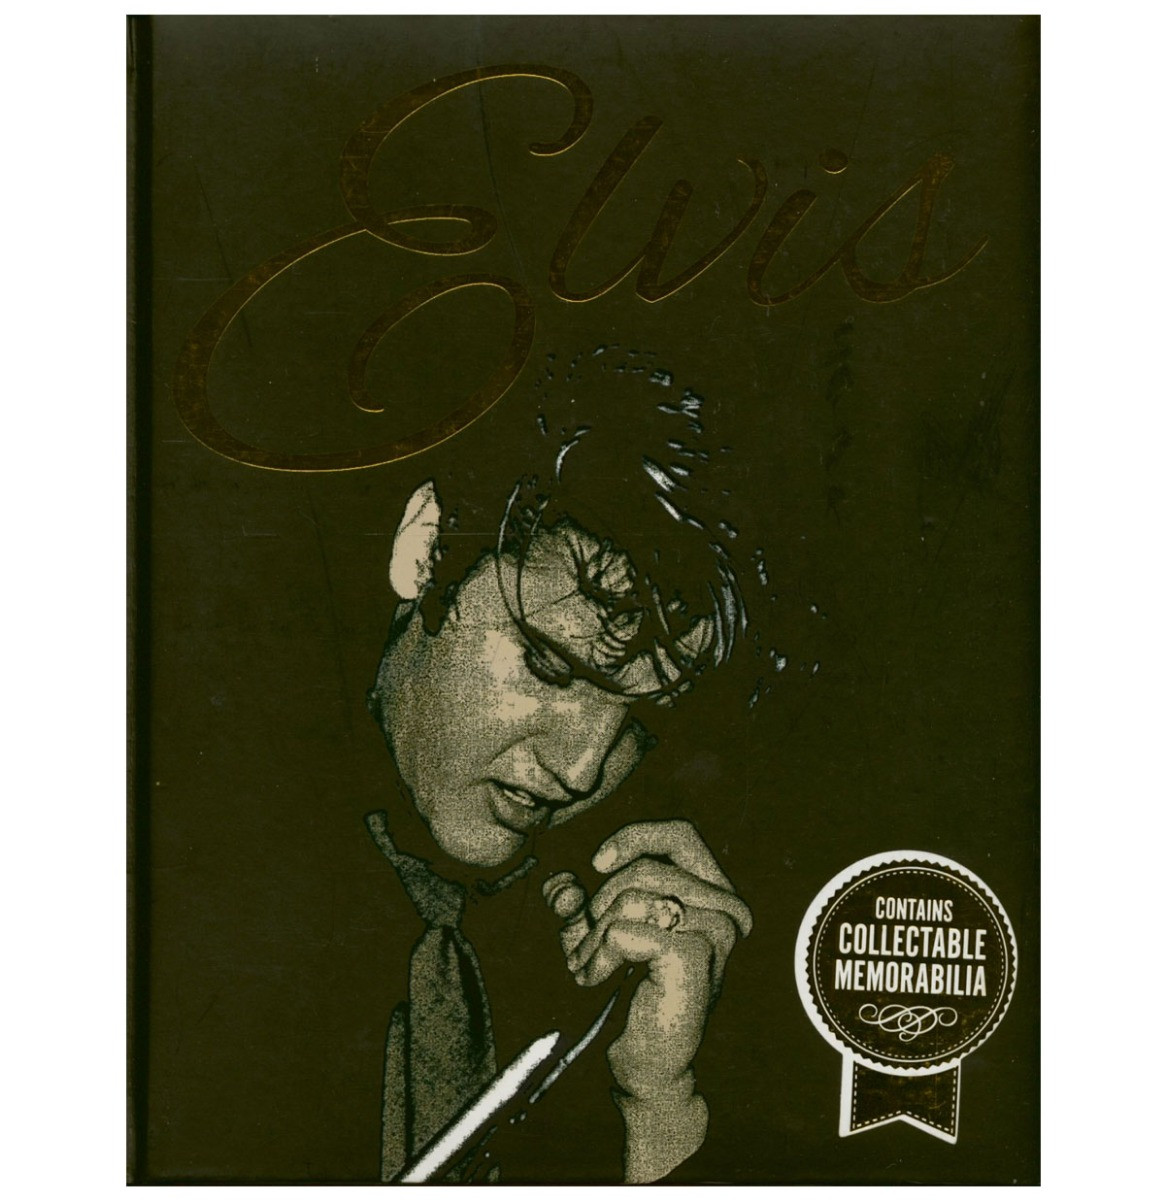 Elvis Presley - A Pictorial Biography by Kim Aitken (Bevat Collectable Memorabilia) - Hardcover